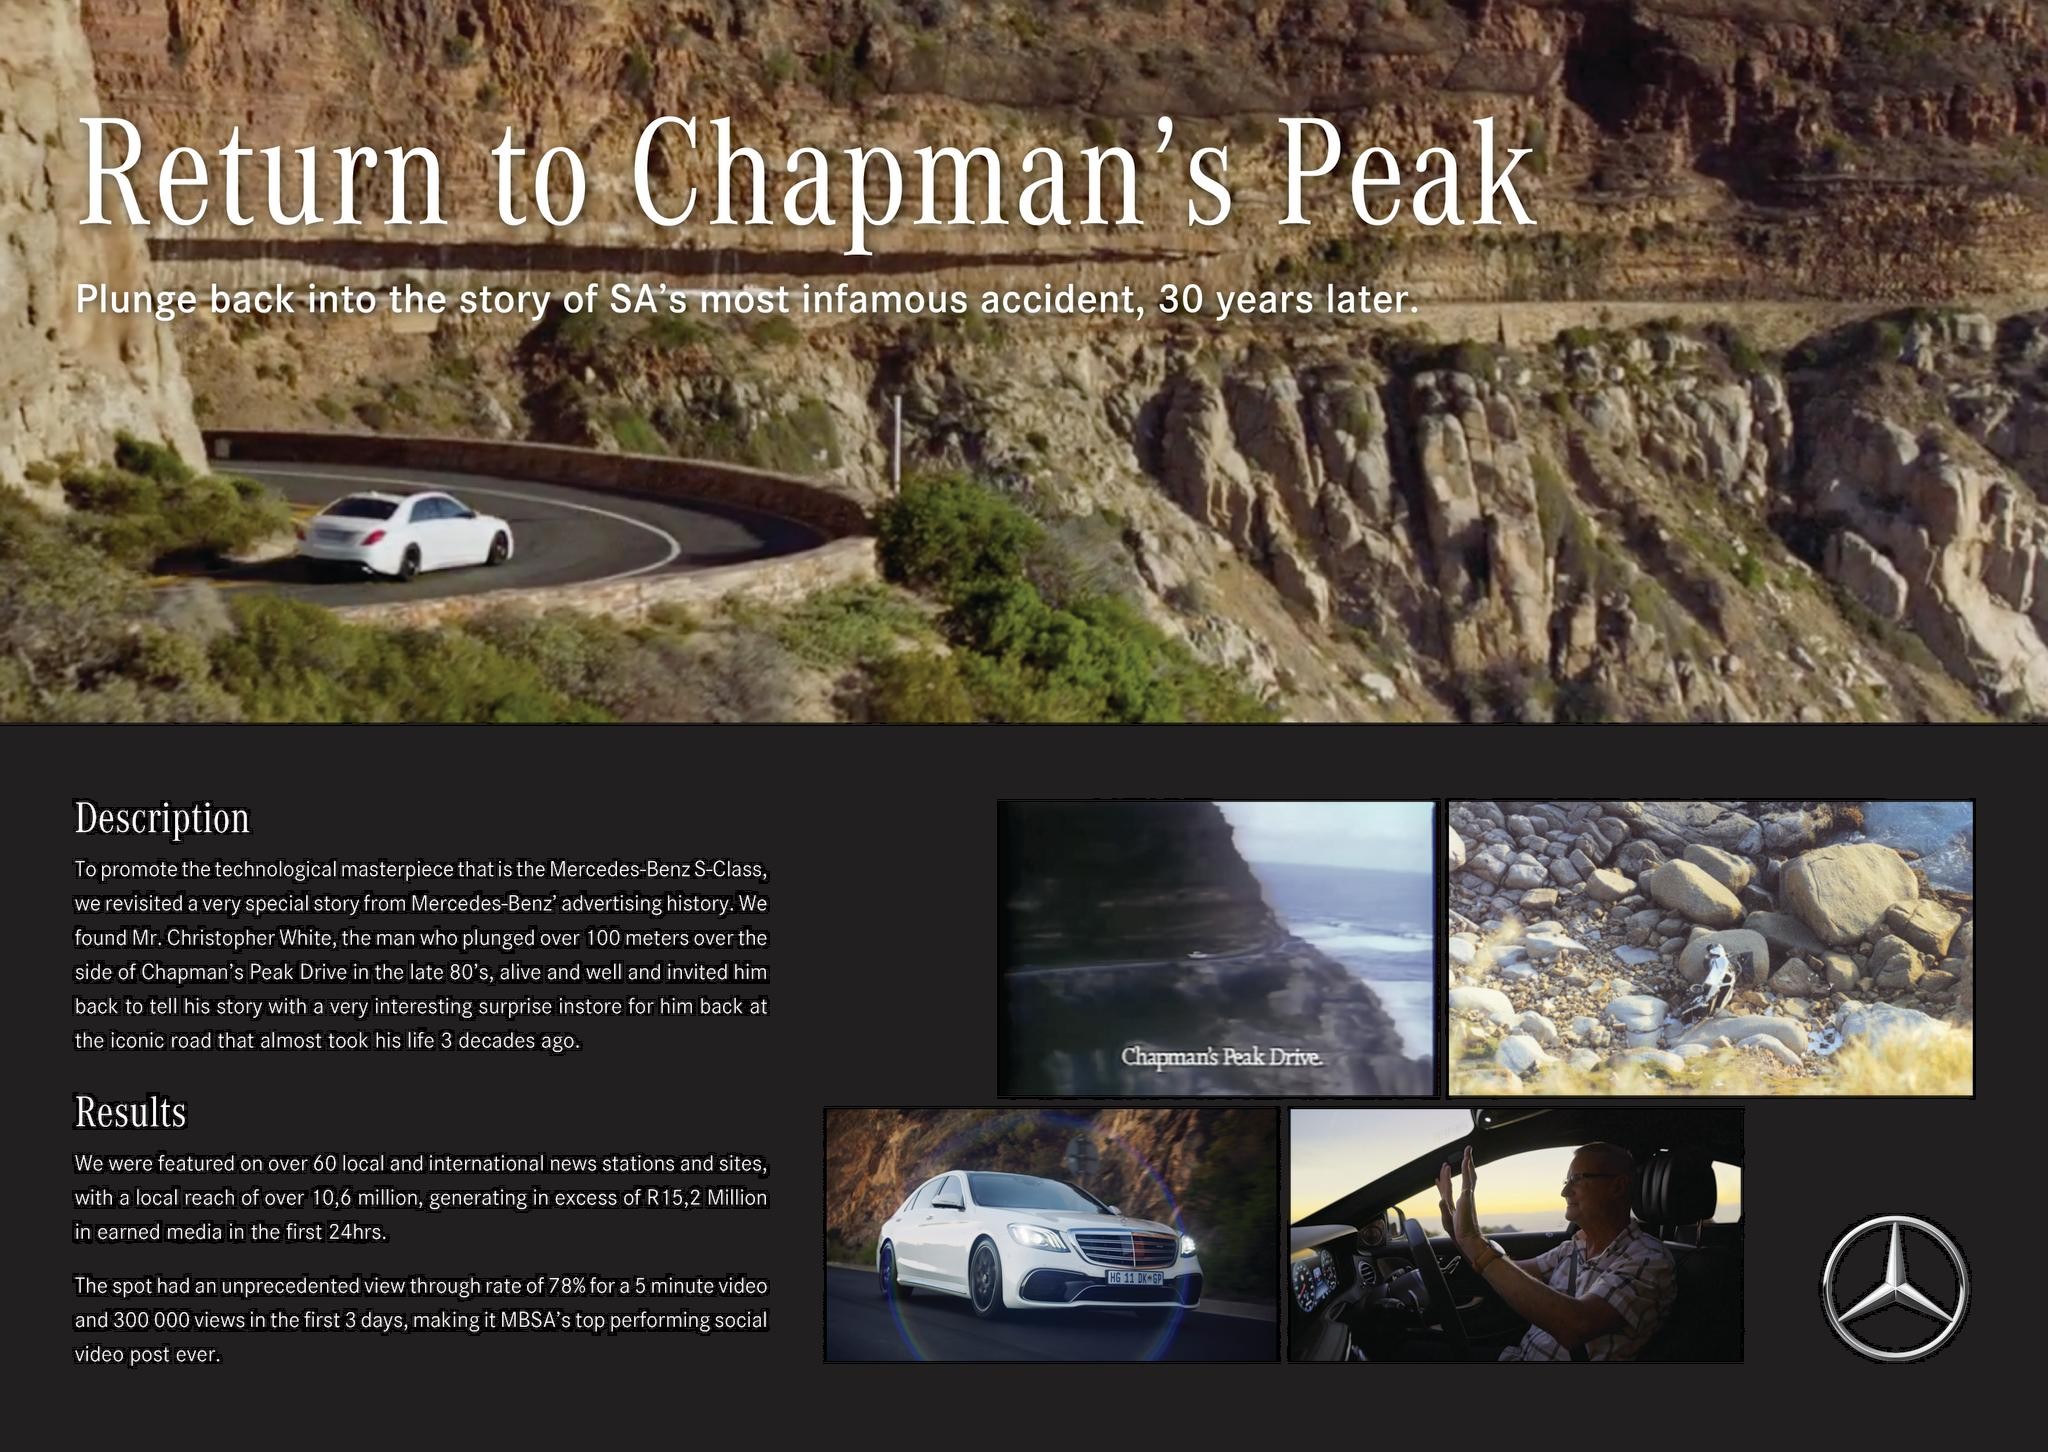 Return to Chapman's Peak